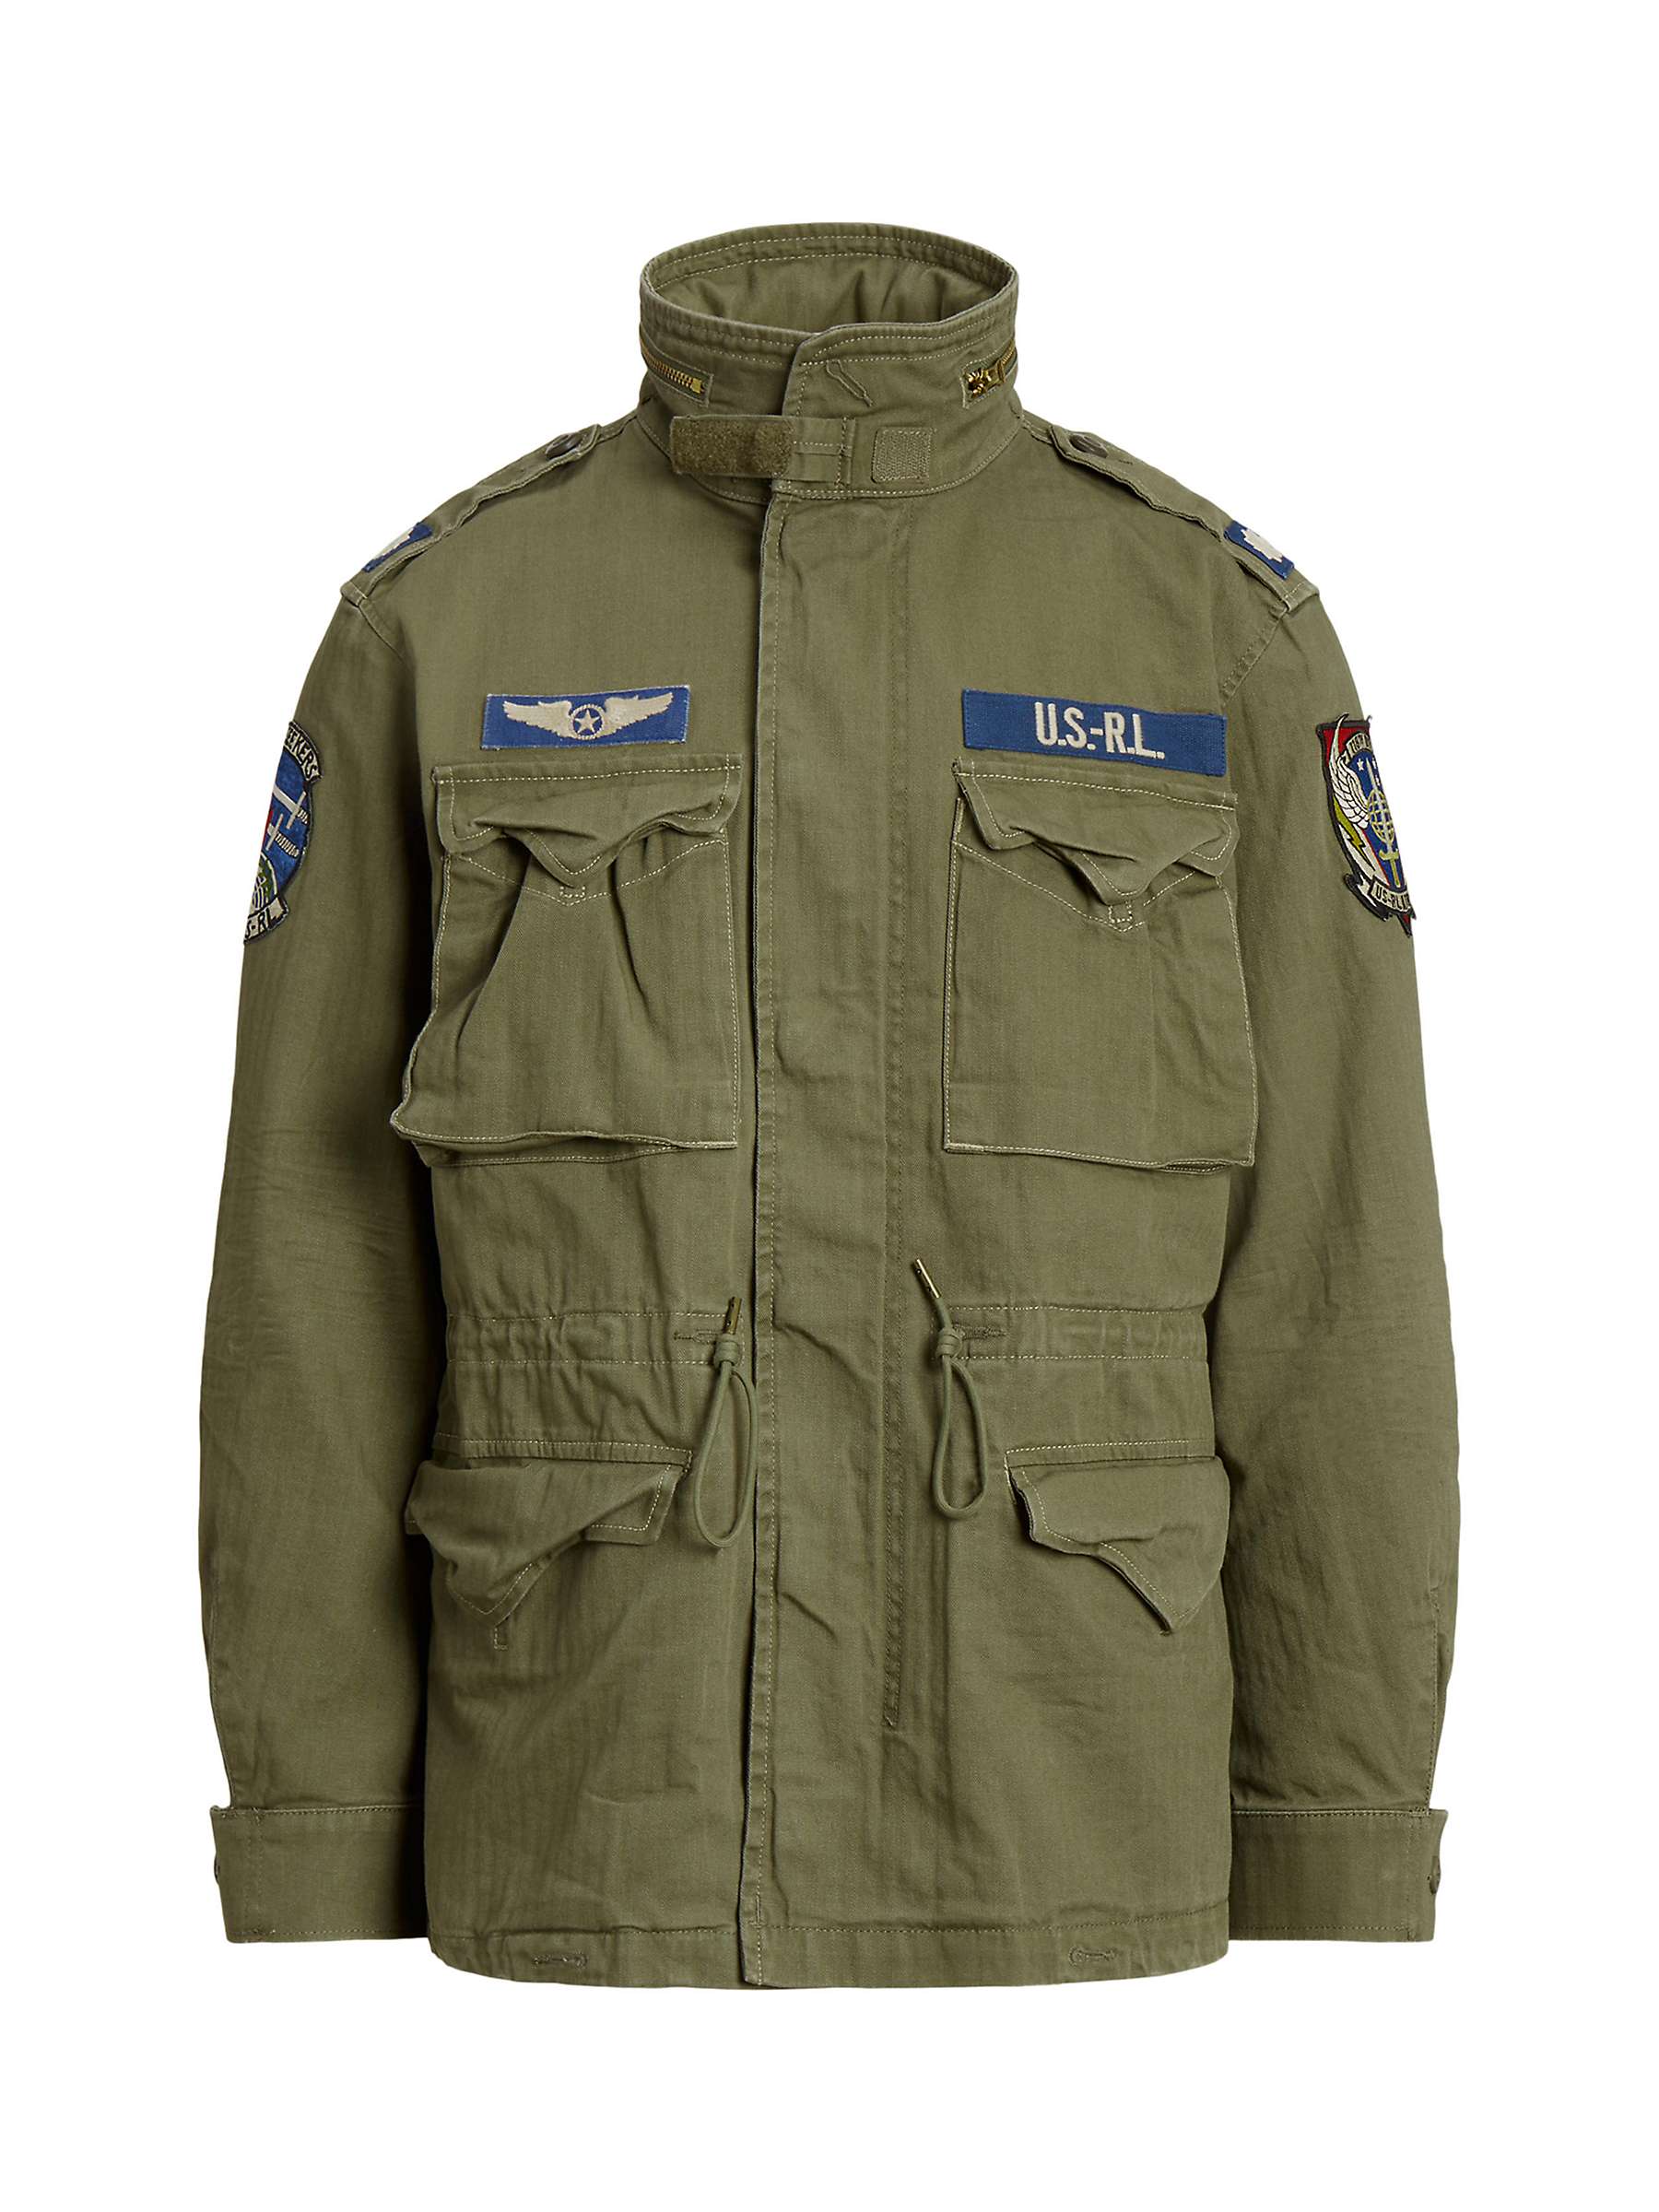 Buy Polo Ralph Lauren M65 Combat Field Jacket, Olive Online at johnlewis.com